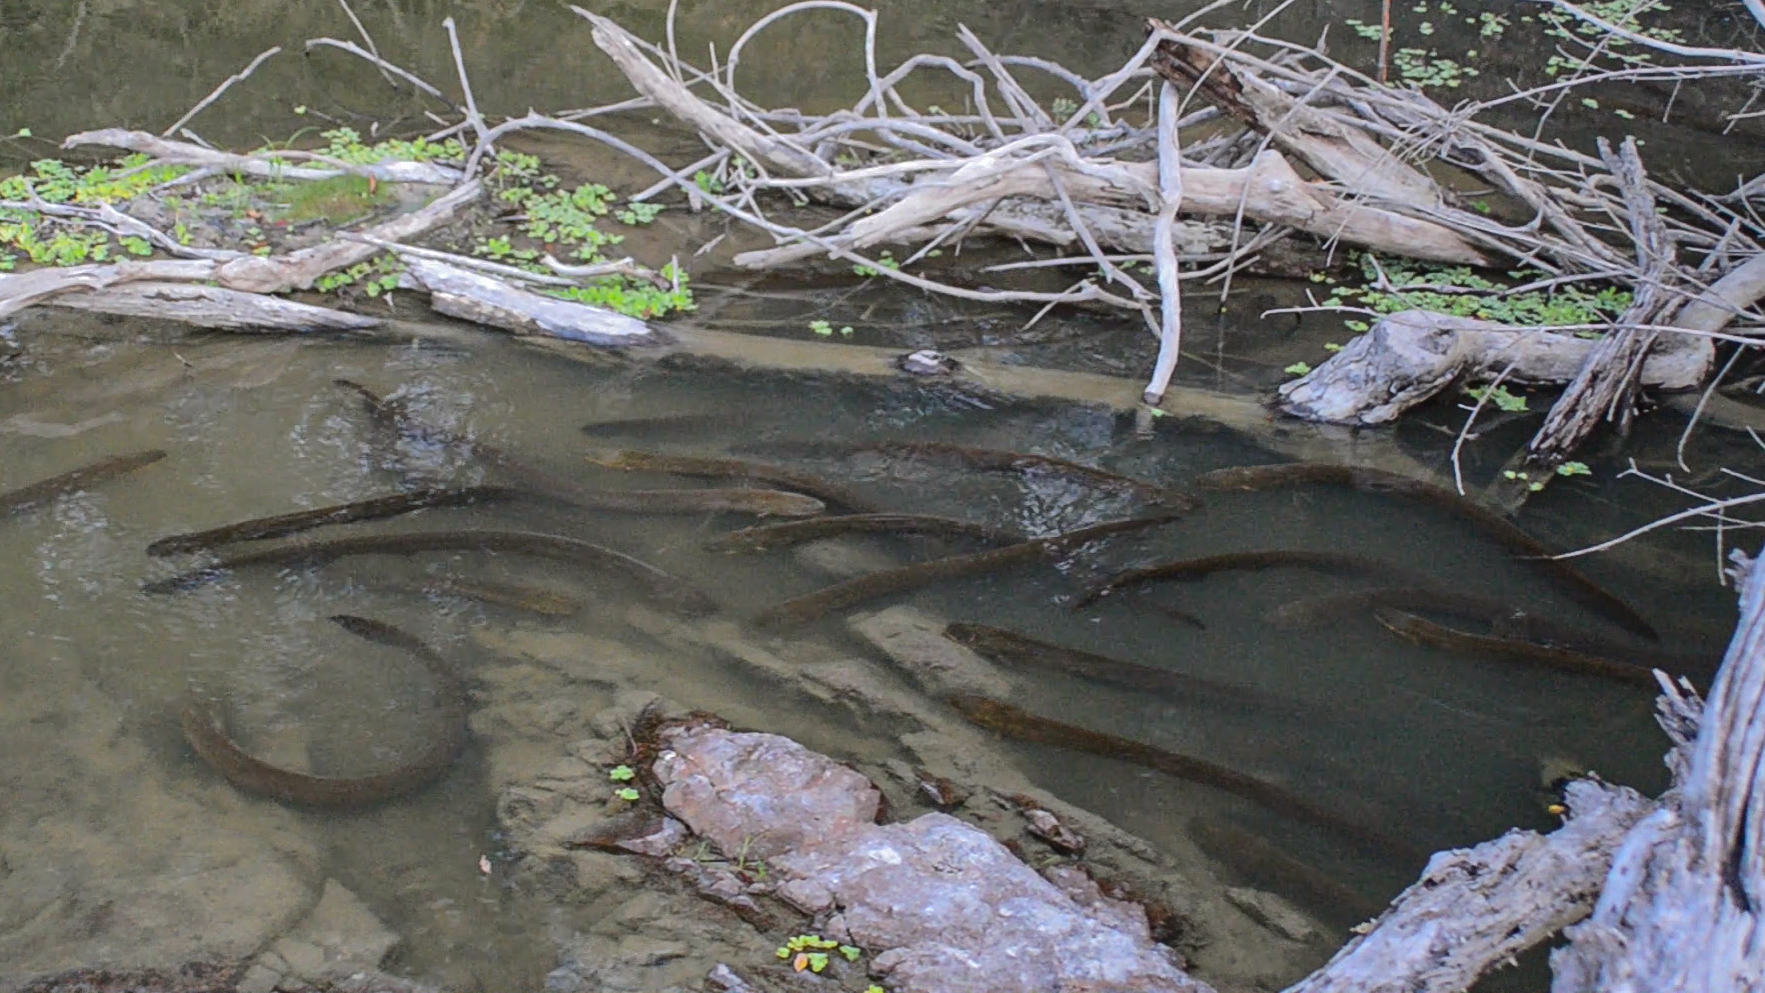 Electric eels in the hunting area, Iriri River. (Photo: Douglas Bastos)